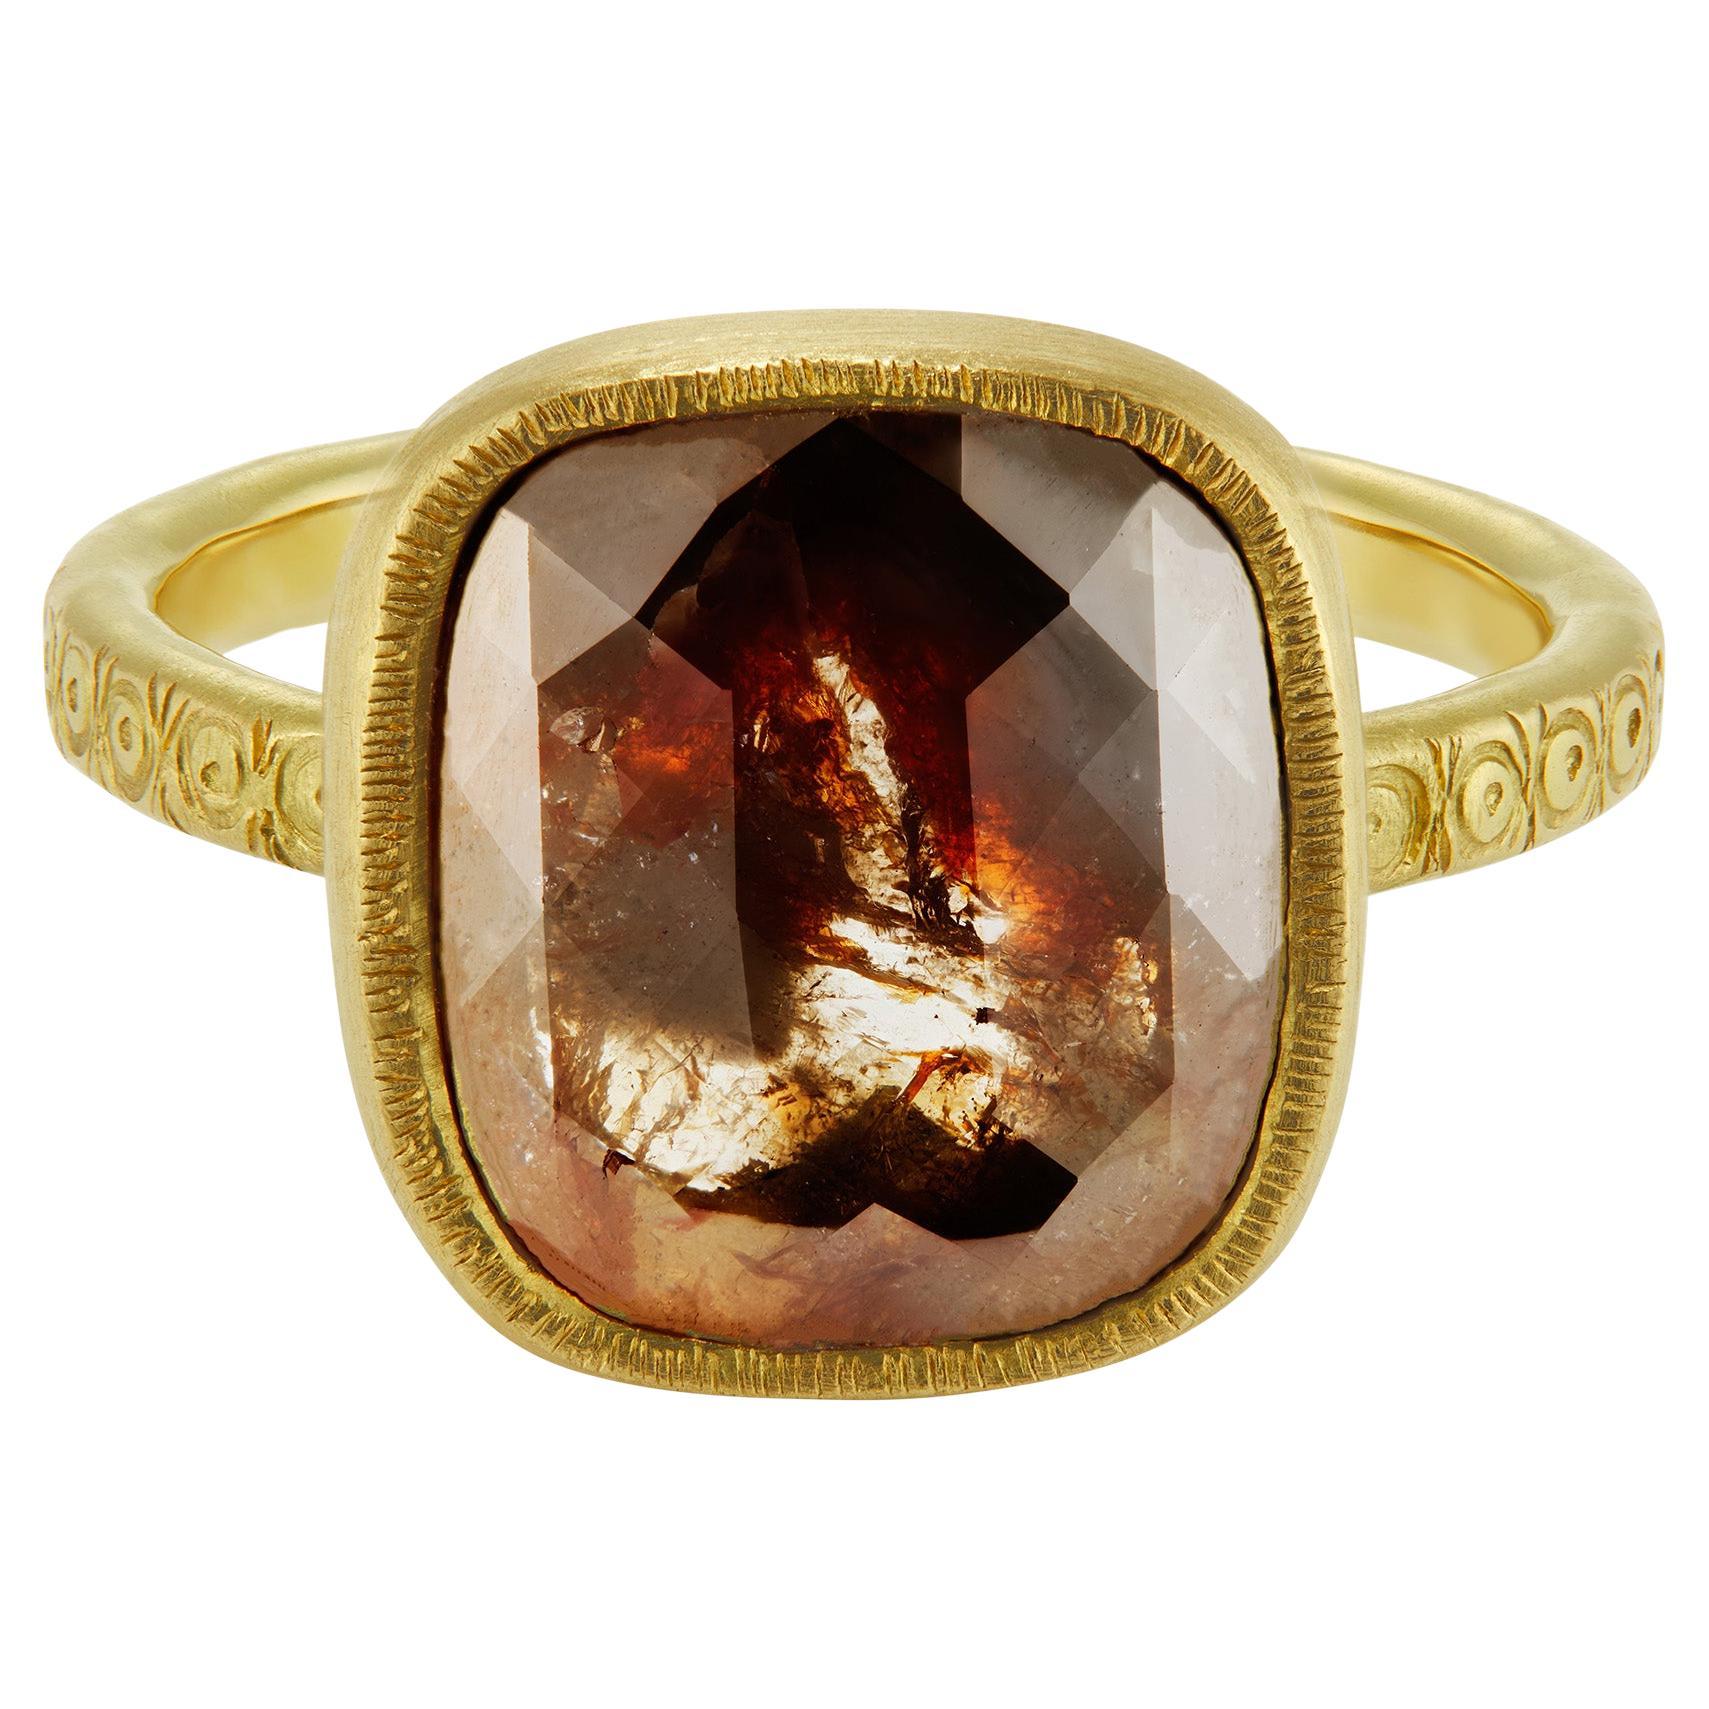 The Eden 3.9 Carat Brown Rose-Cut Diamond Ring